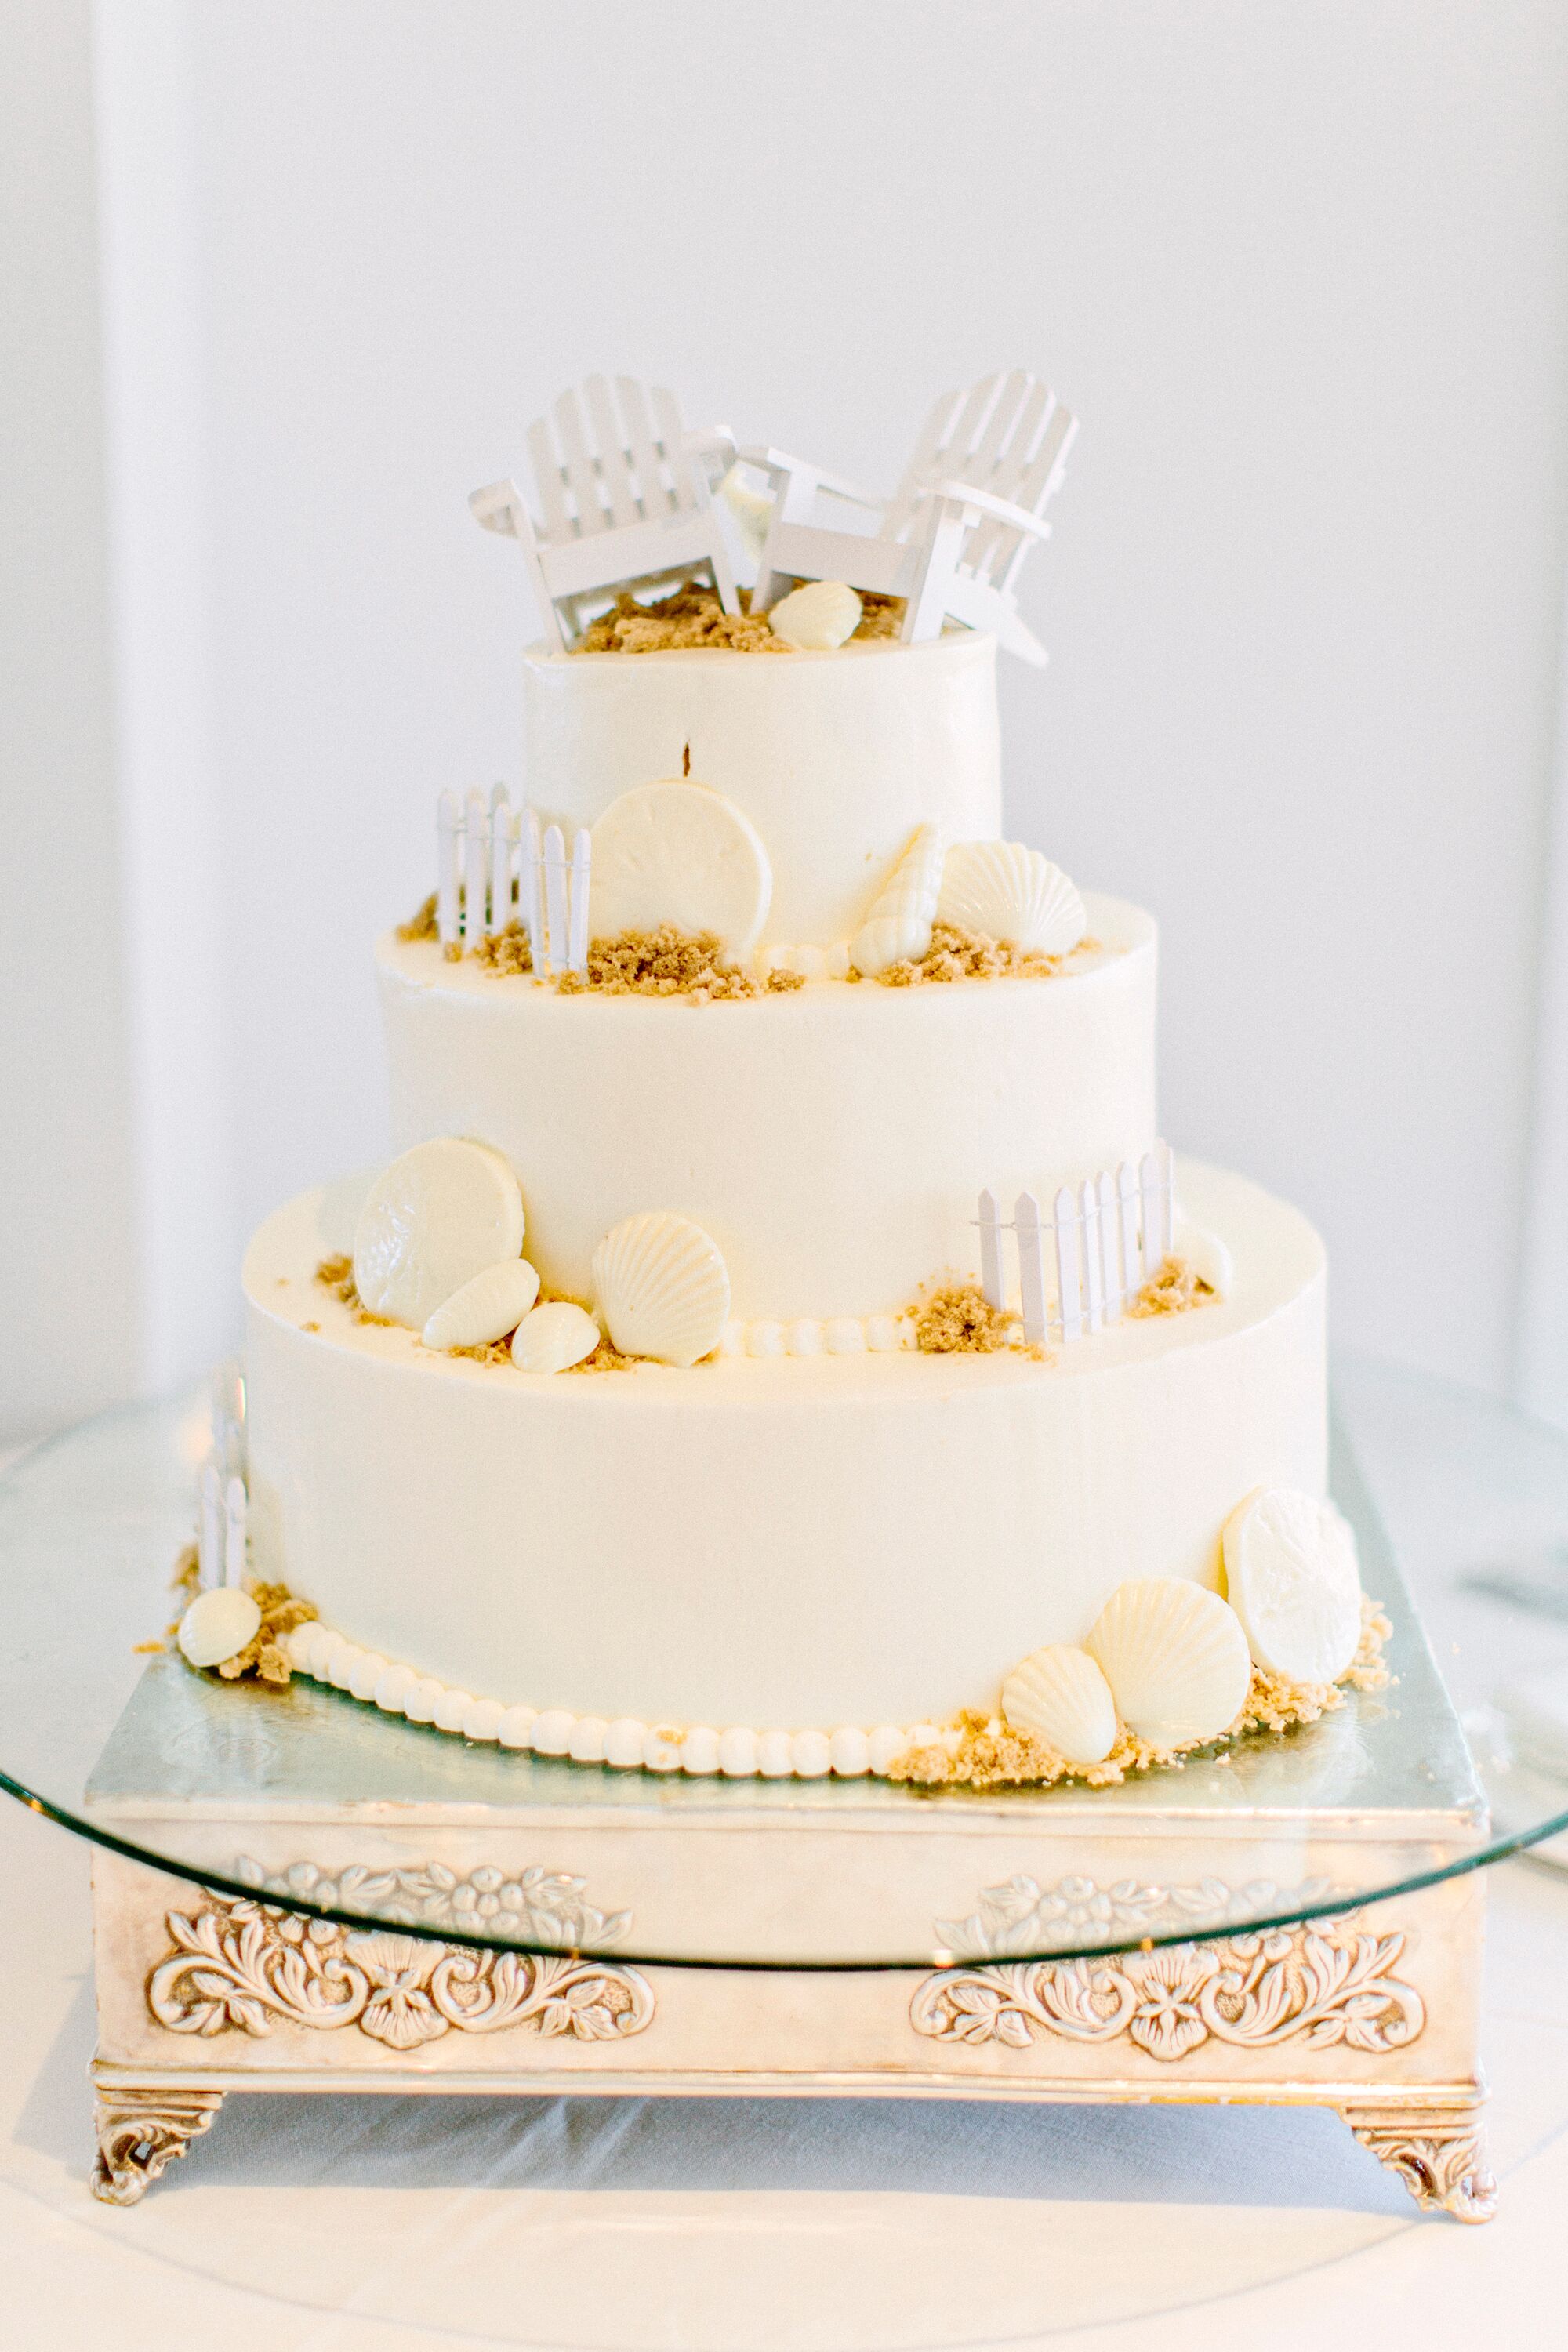 Beach and Seashell-Themed Wedding Cake